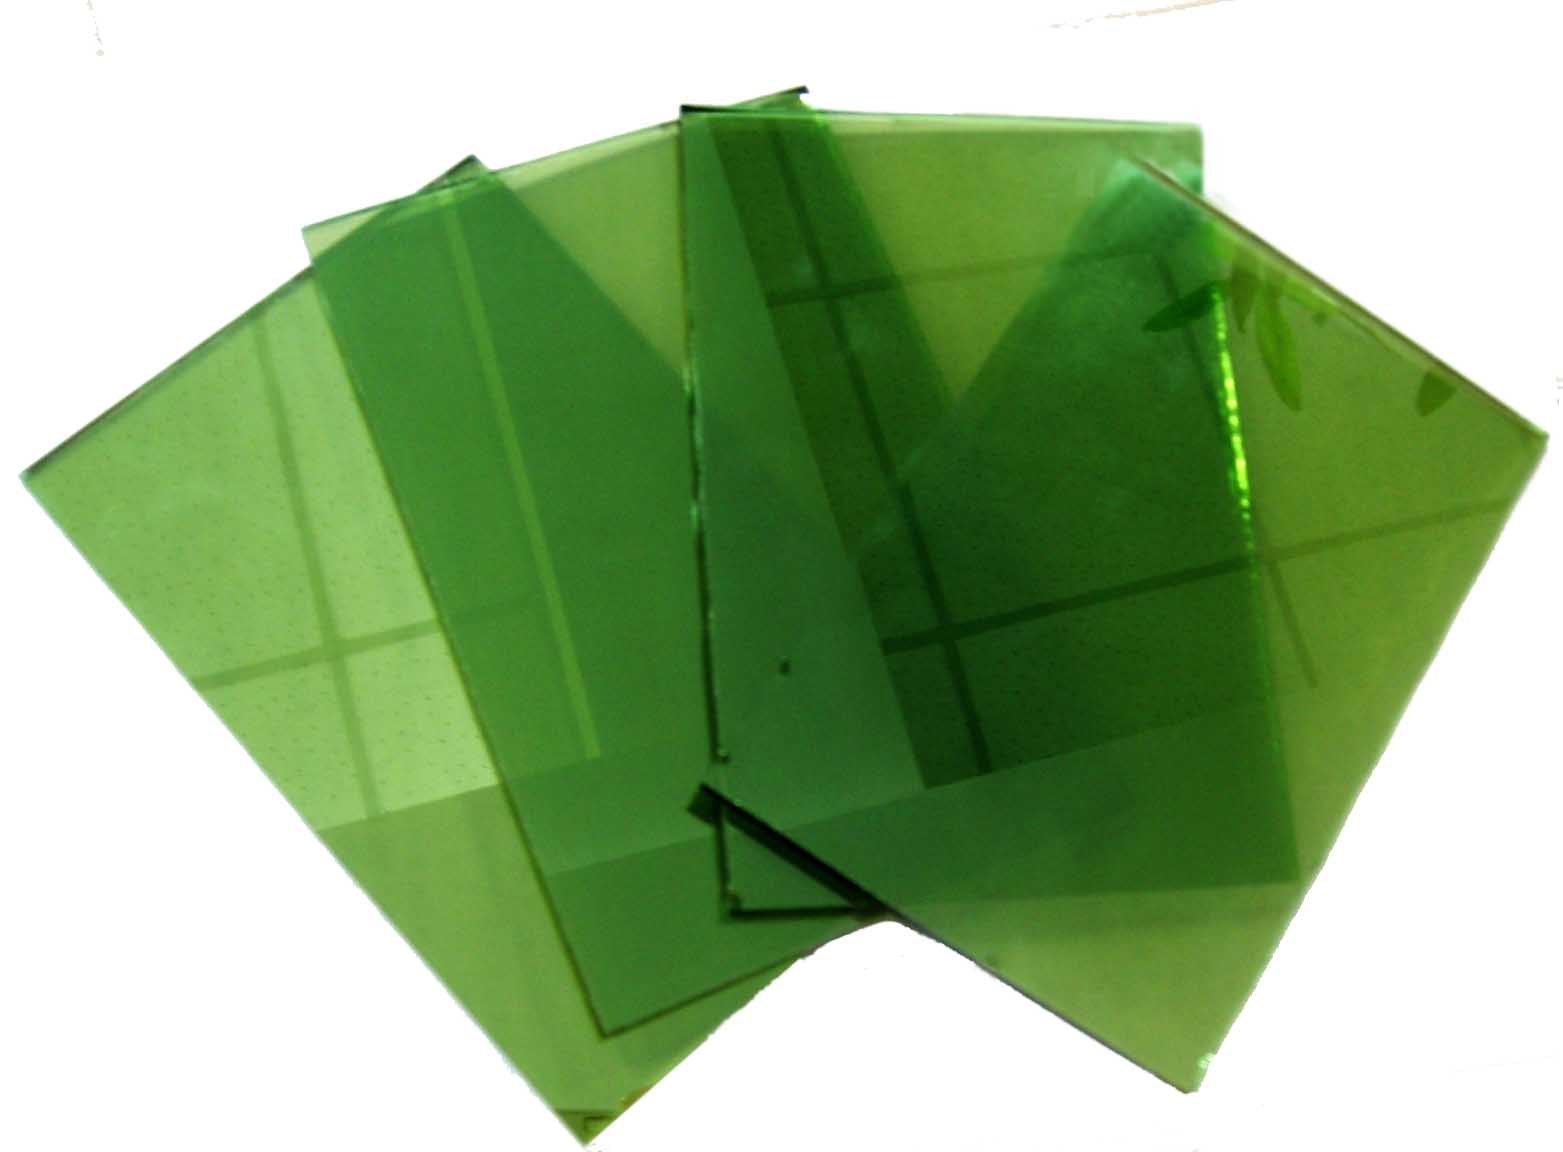 Dark Green Reflective Glass (GS-62)